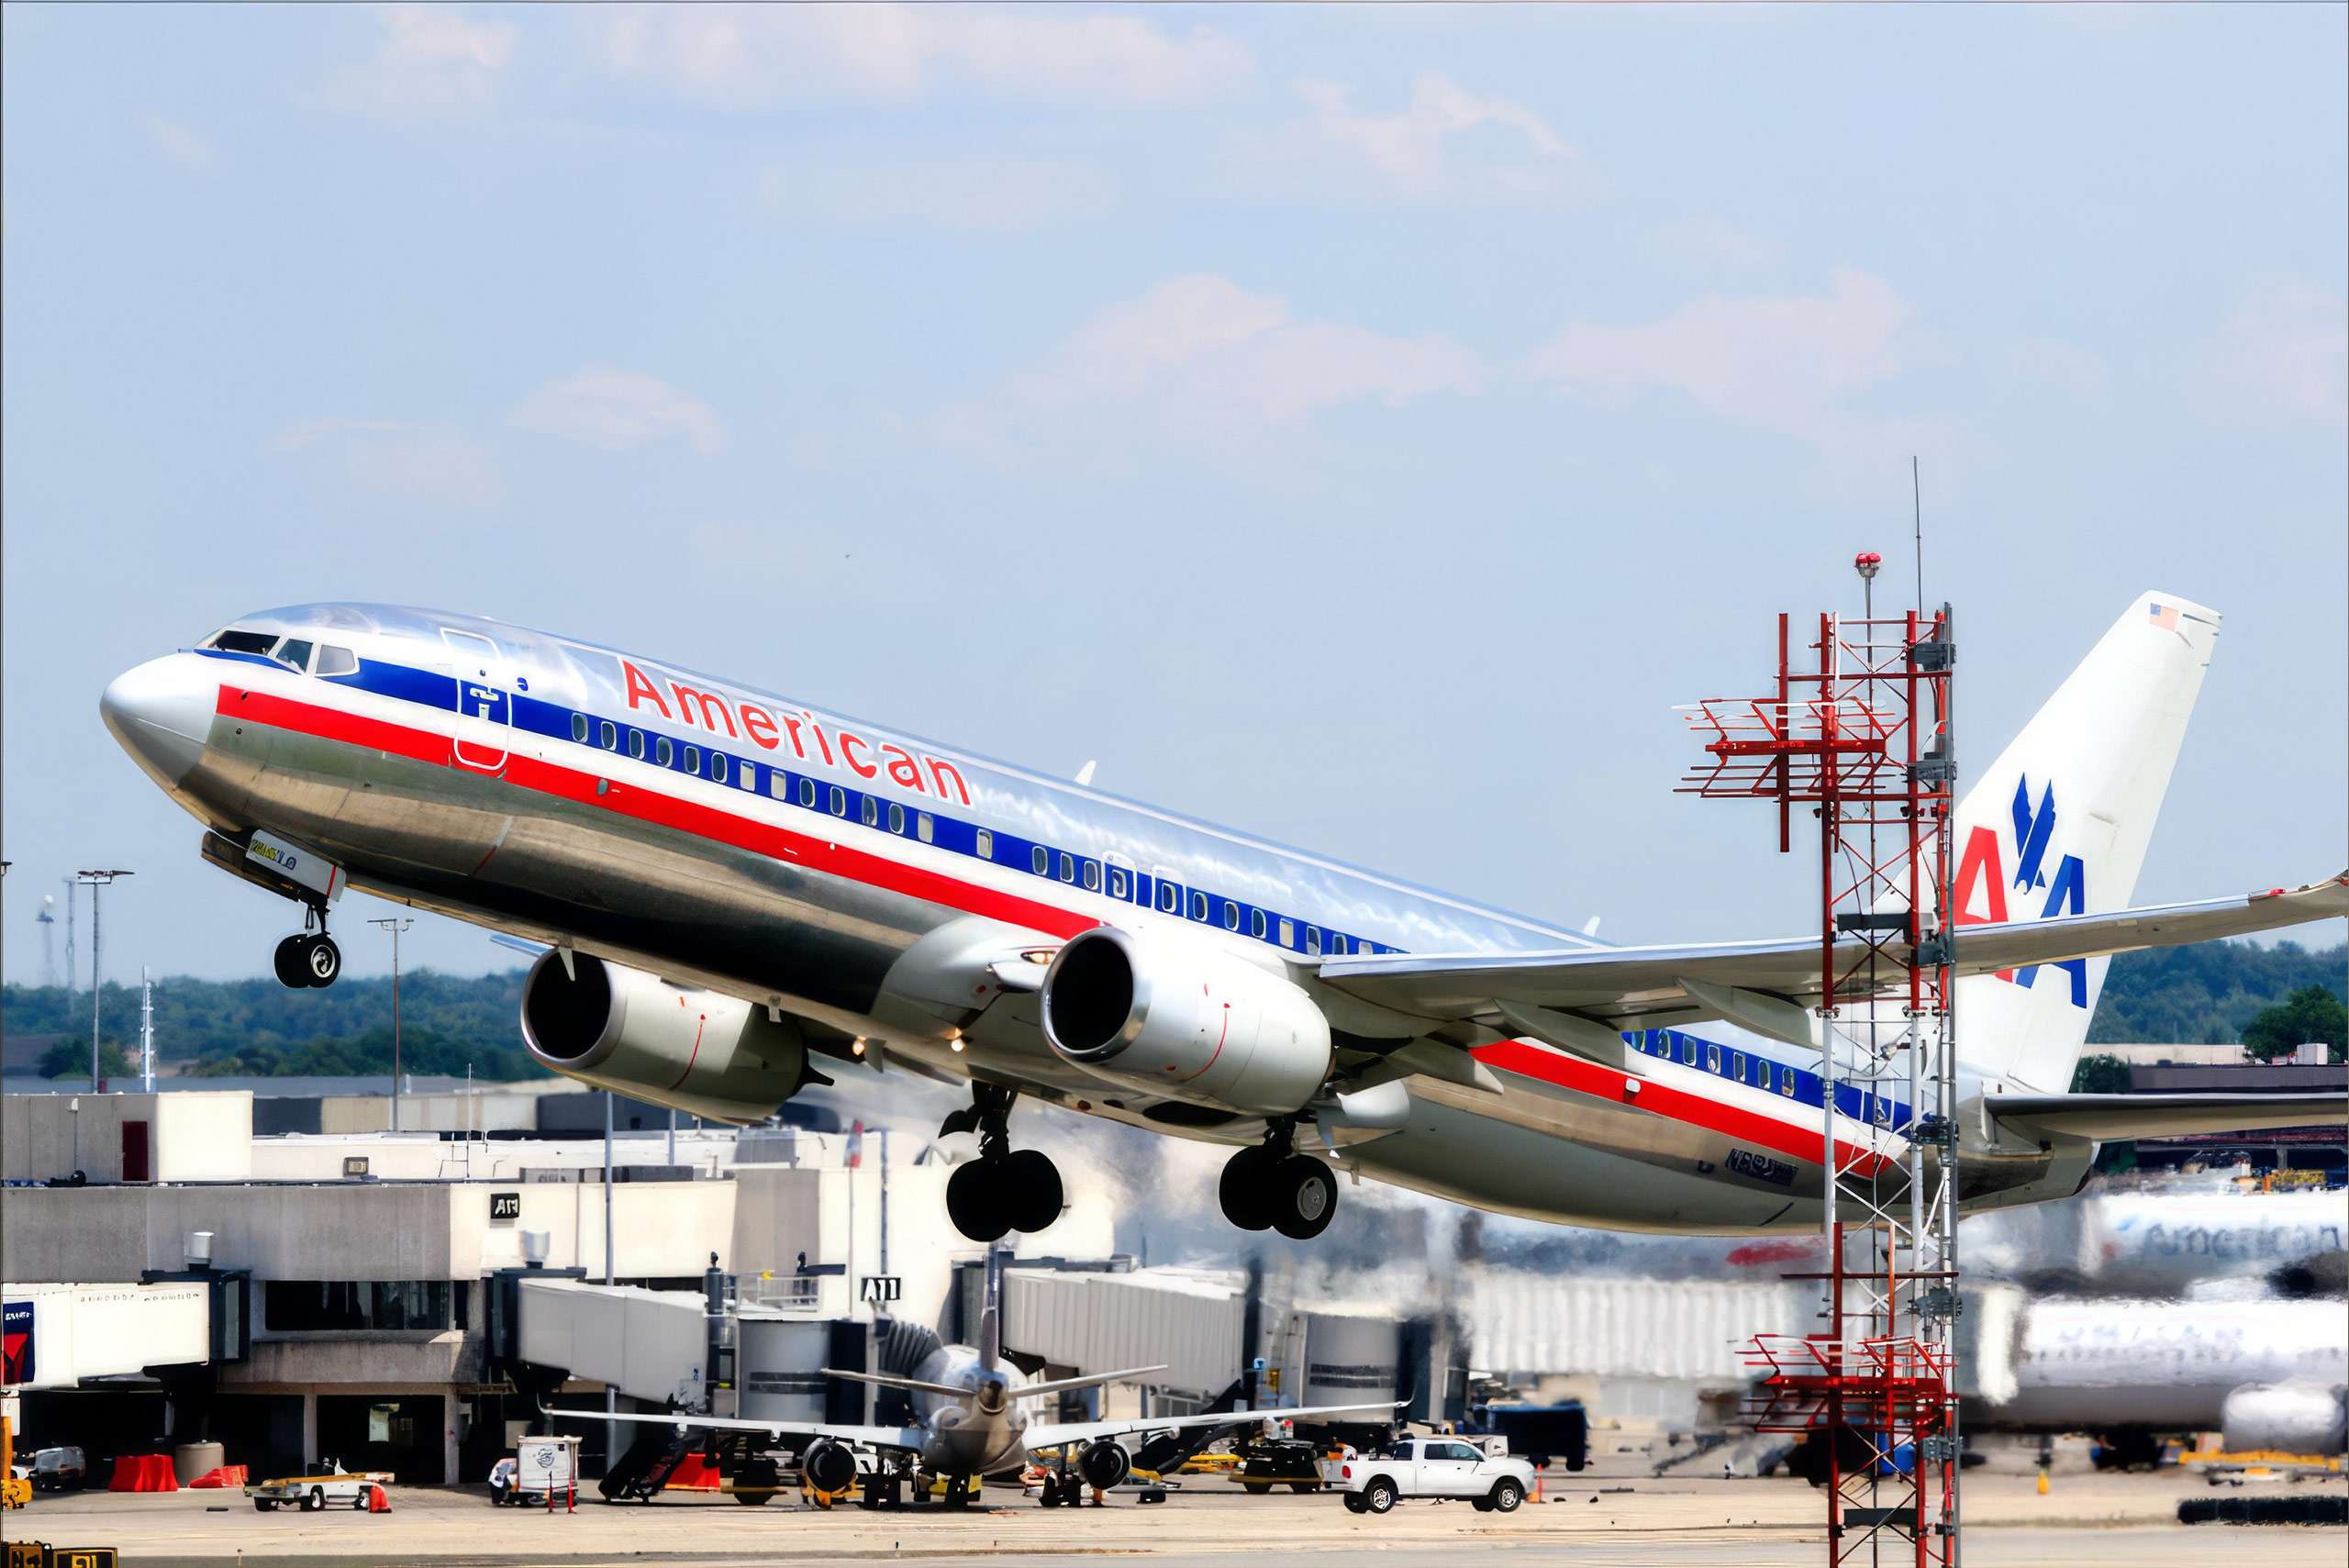 Airplane taking off at Charlotte Douglas International Airport